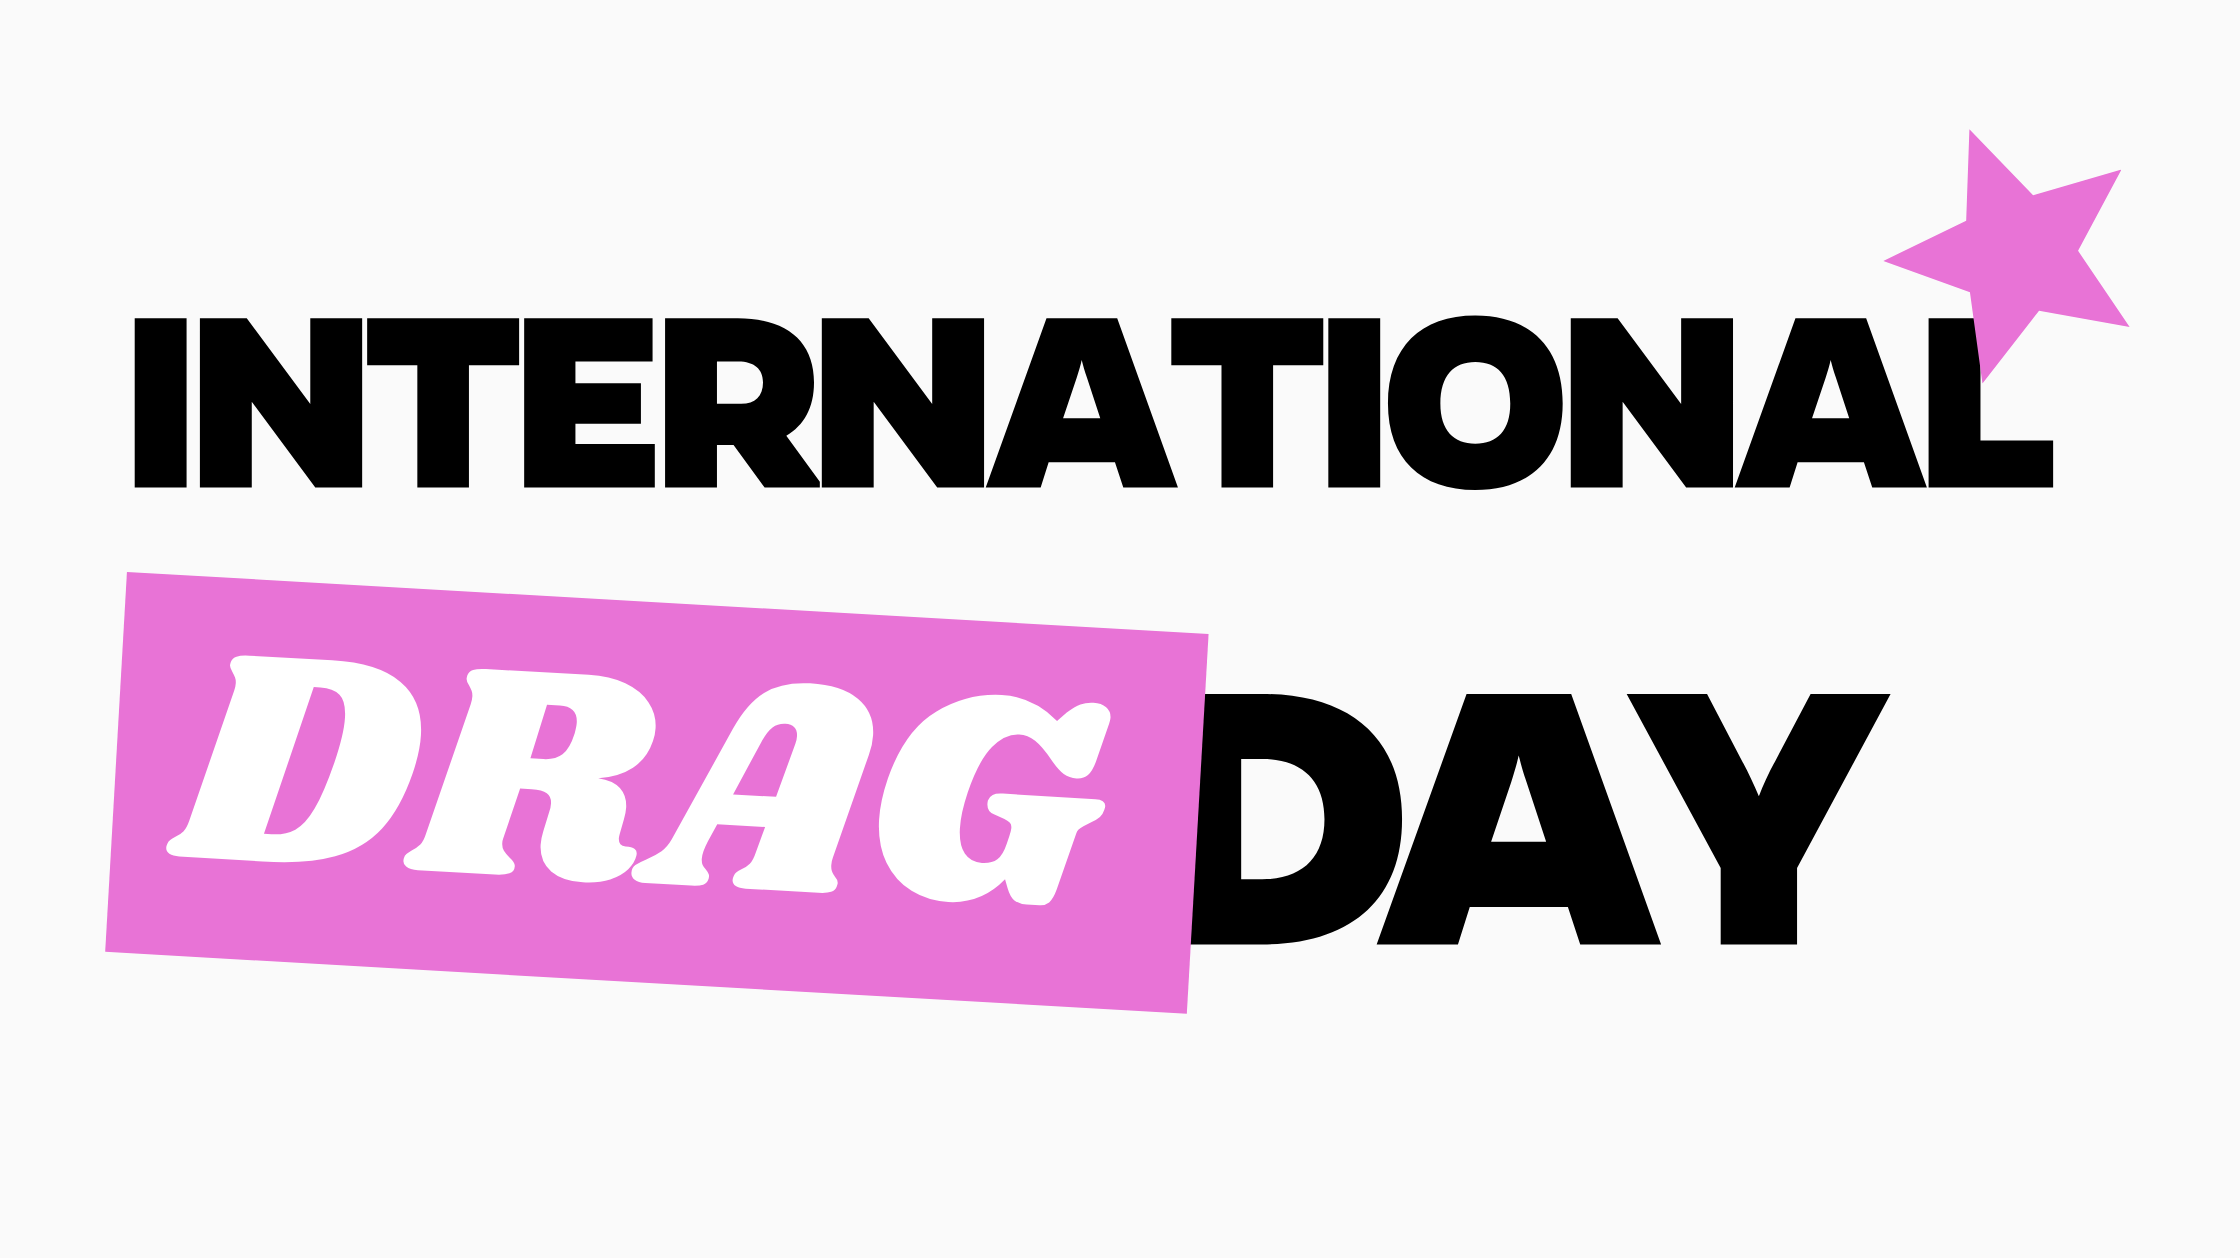 It's International Drag Day!